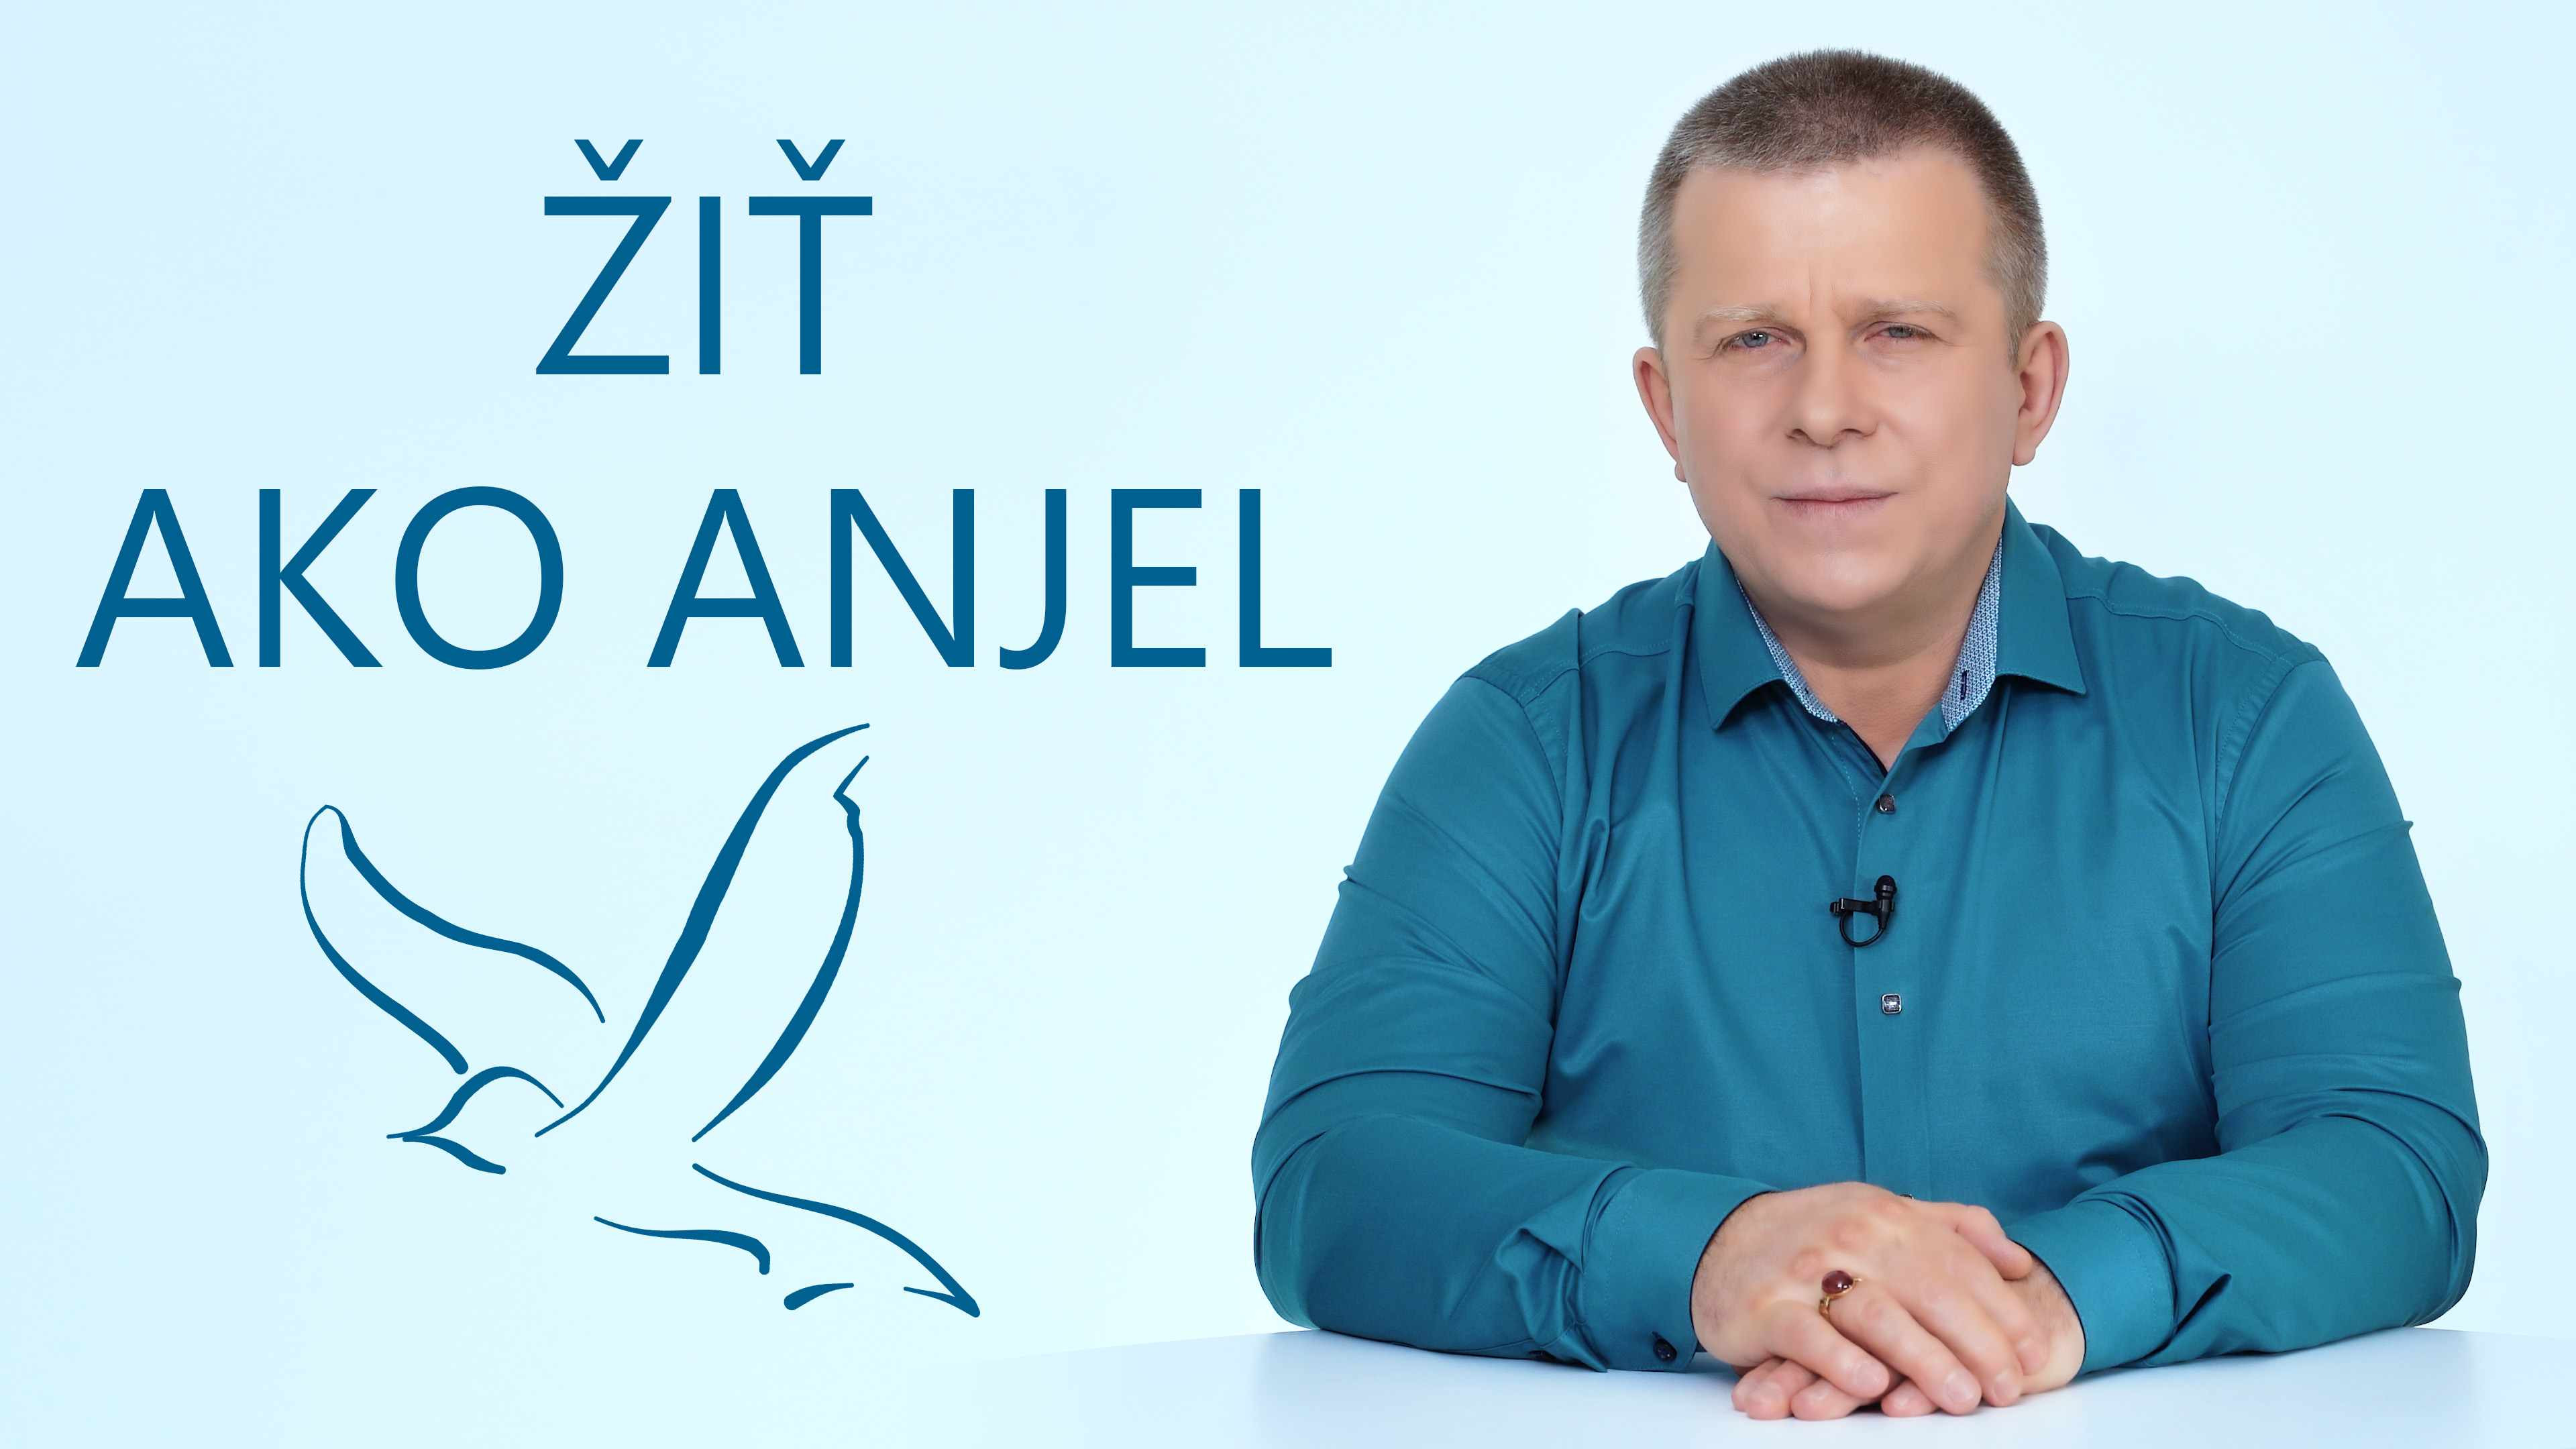 Žiť ako Anjel (slovenské youtube titulky)